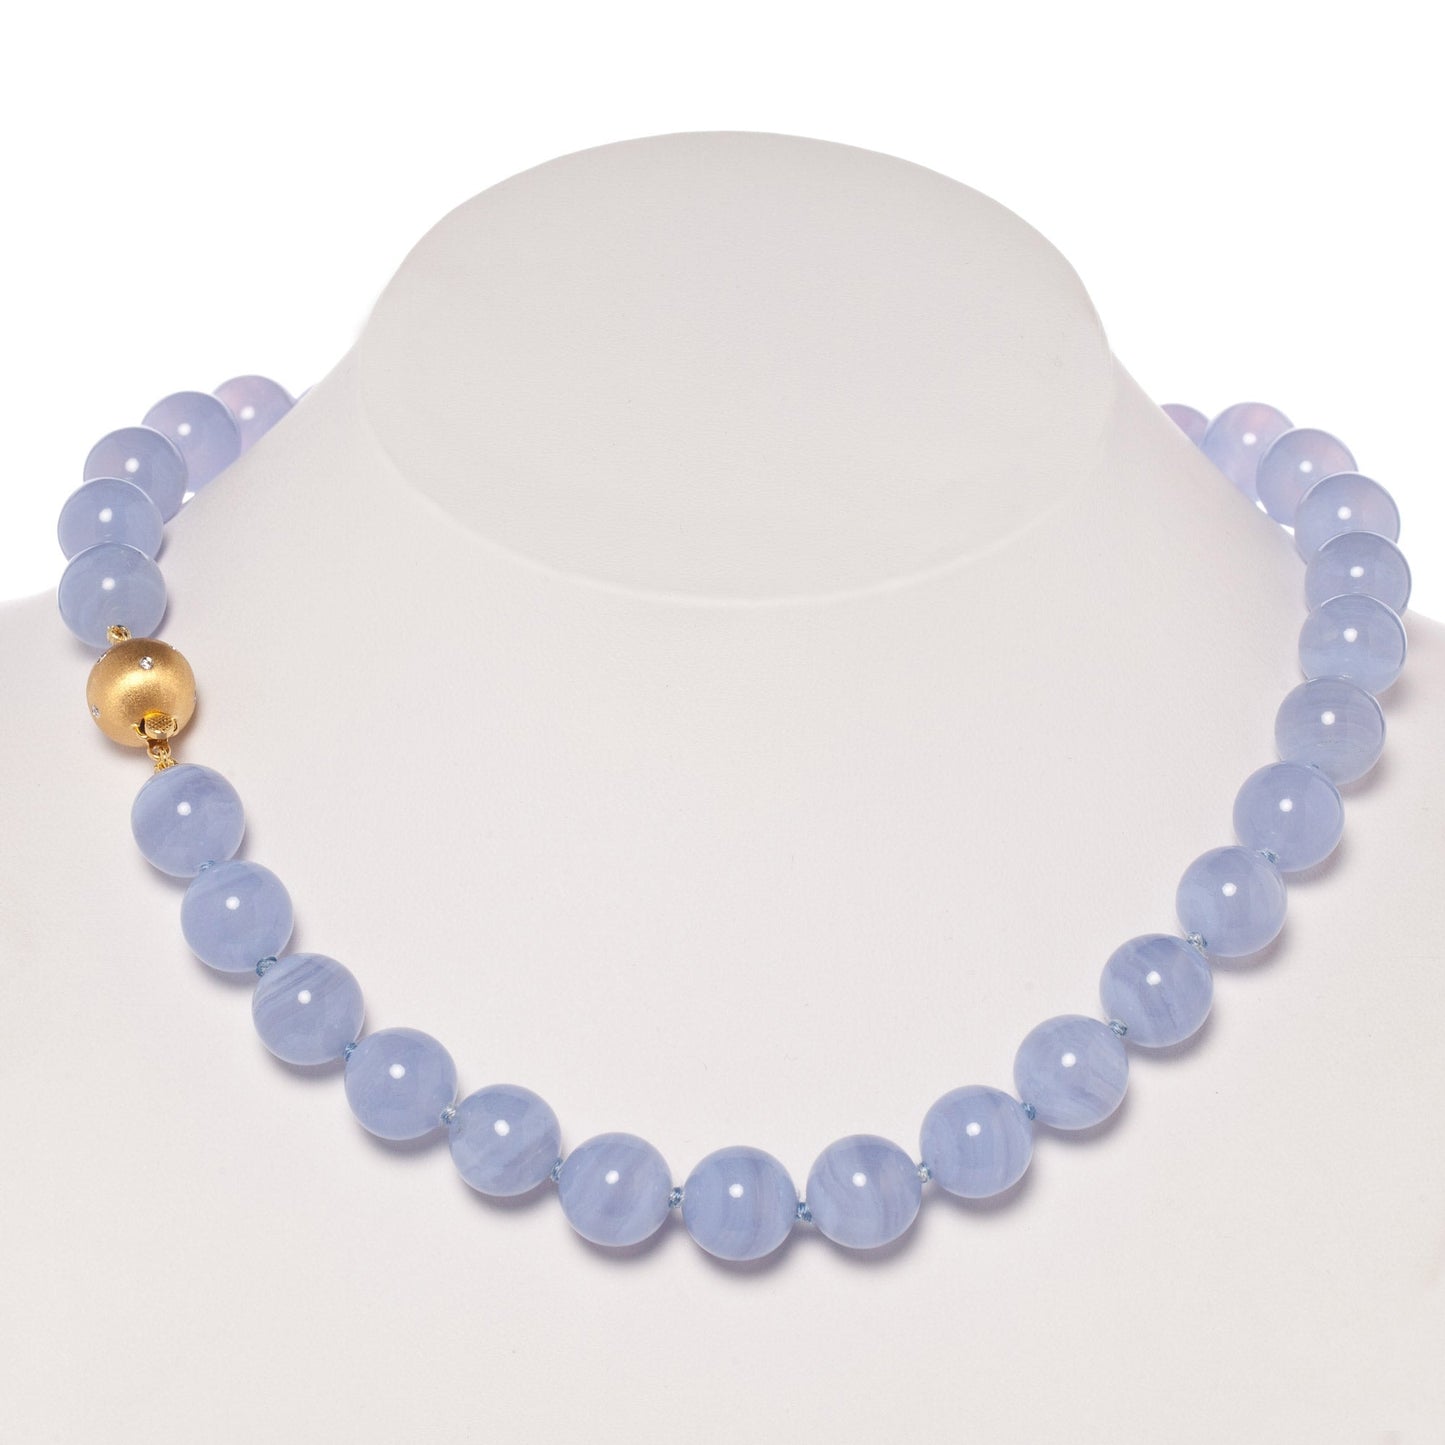 12mm Blue Lace Agate & Gold Necklace